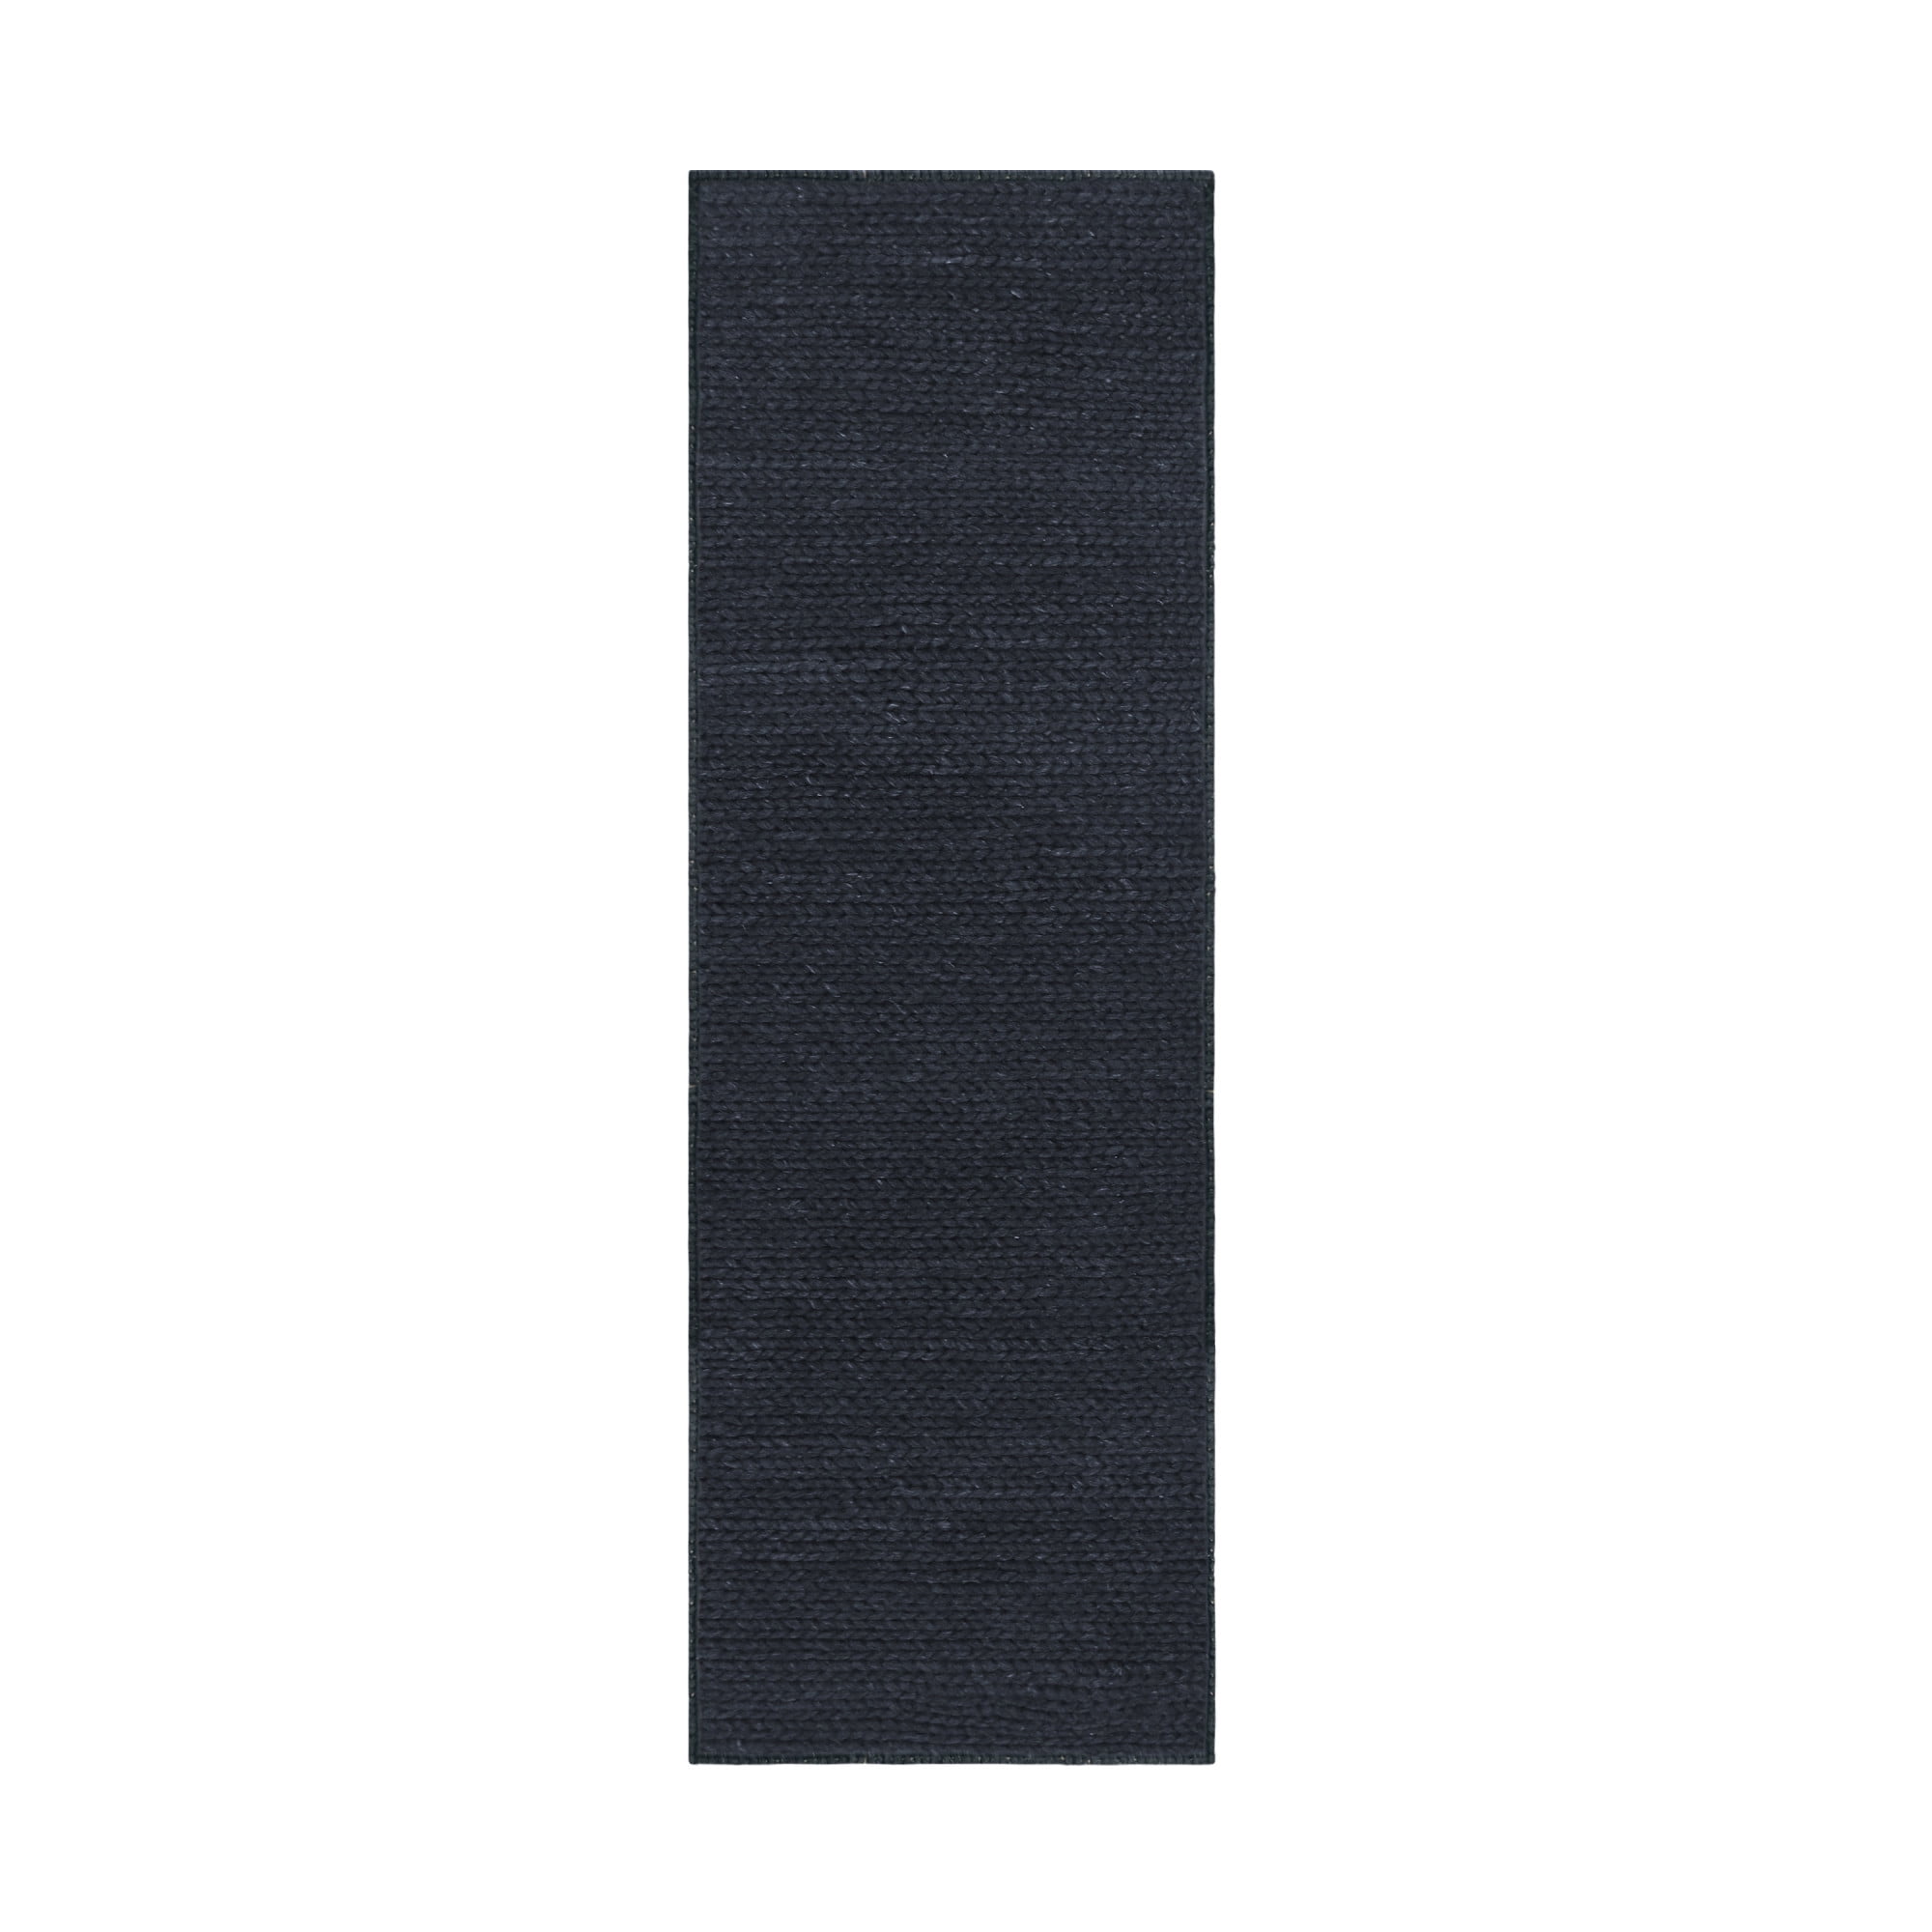 Superior Aero Hand-Braided Wool Area Rug, 8' x 10', Light Grey